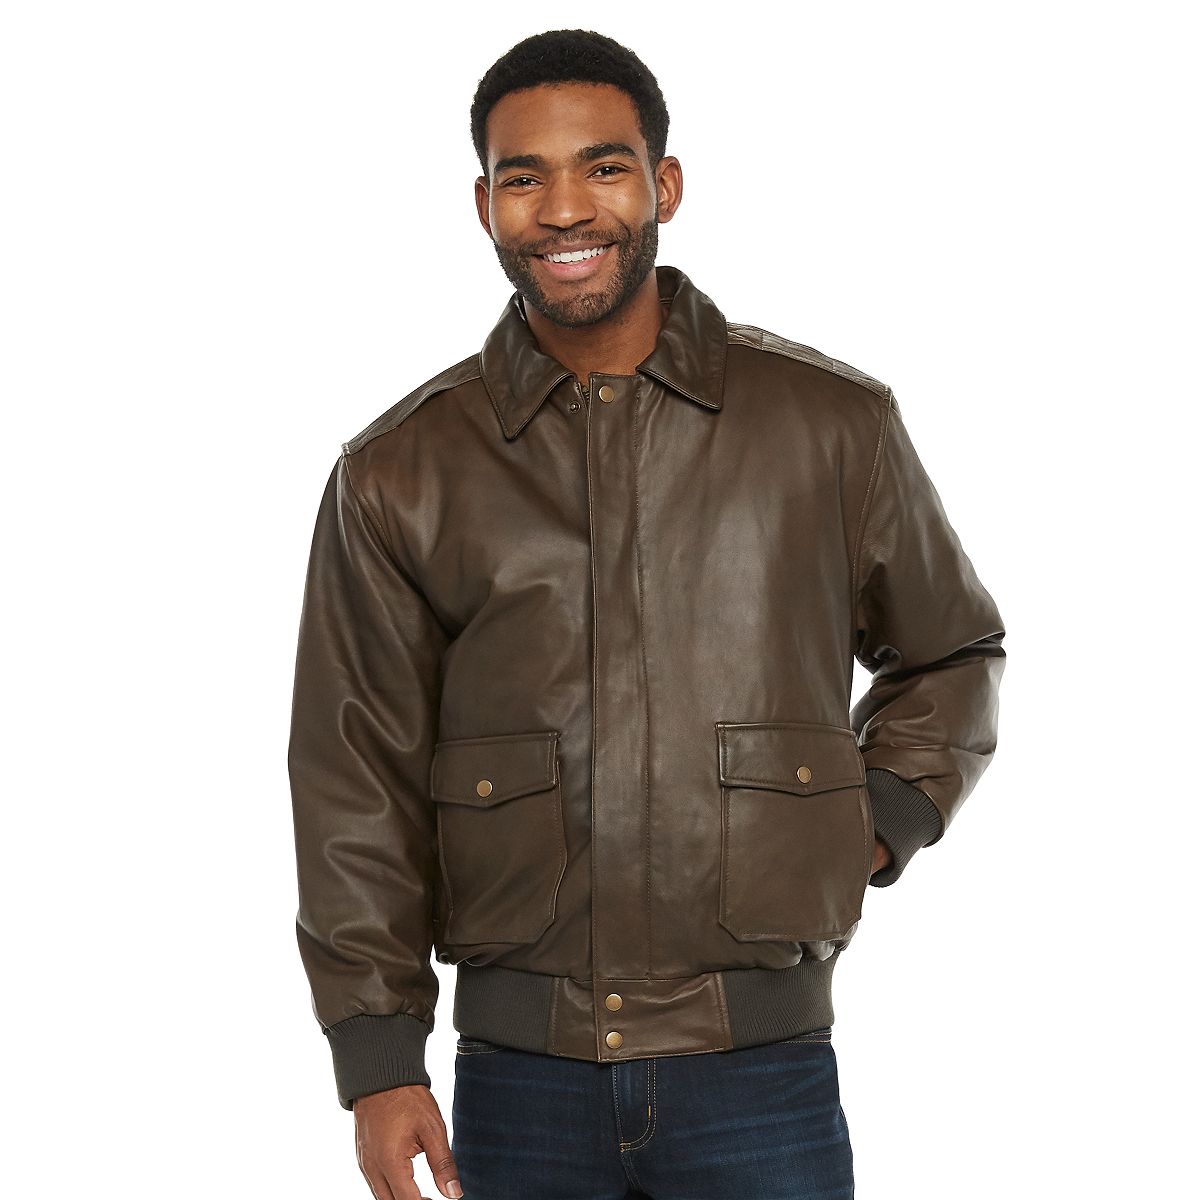 55.kohl s men s vintage leather distressed leather jacket